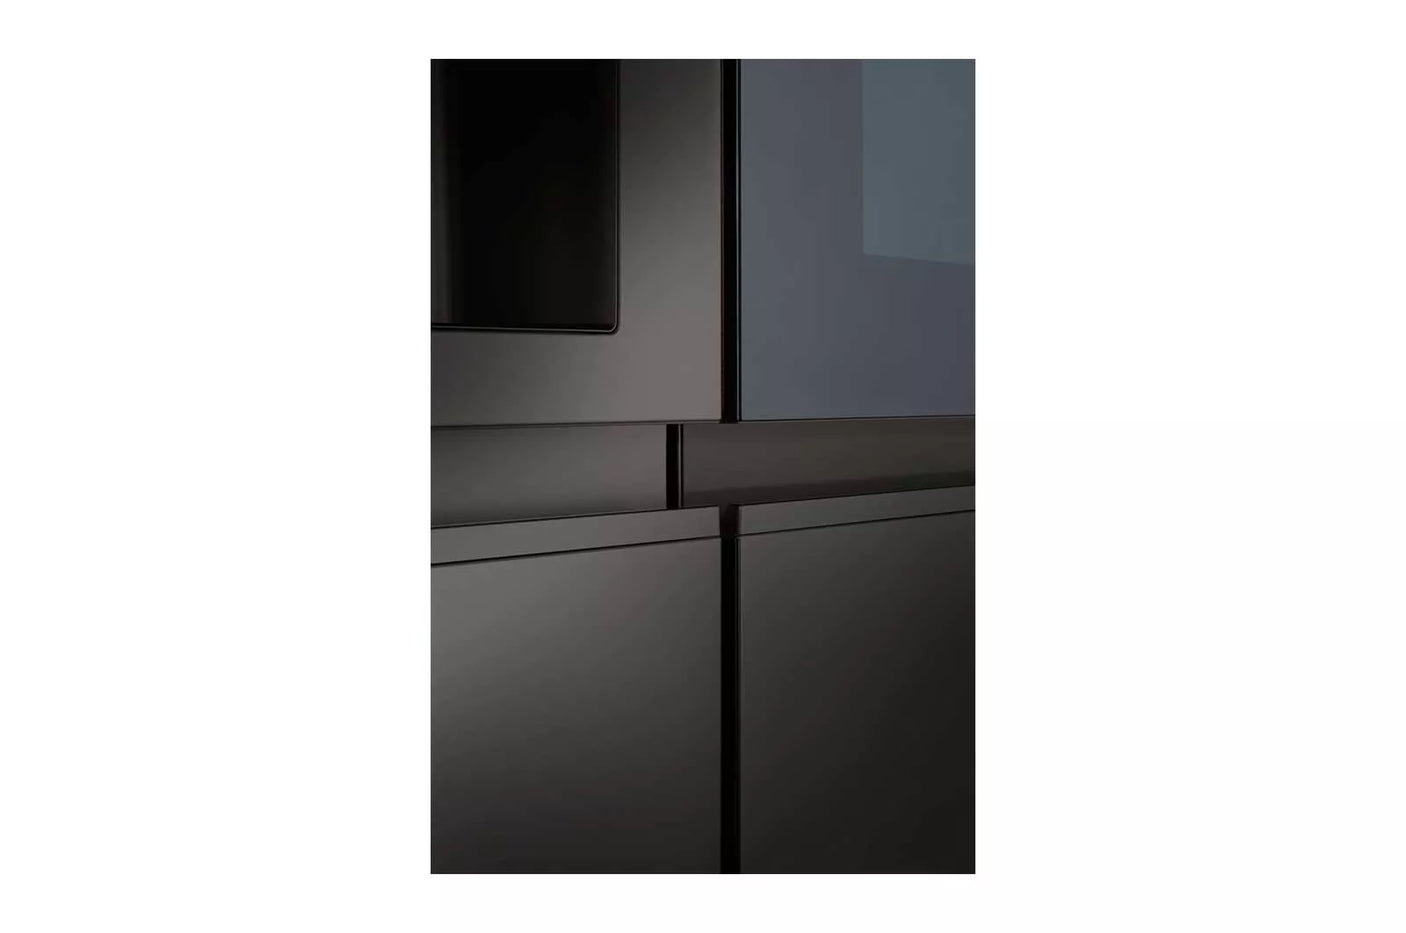 27 cu. ft. Side-By-Side InstaView® Refrigerator